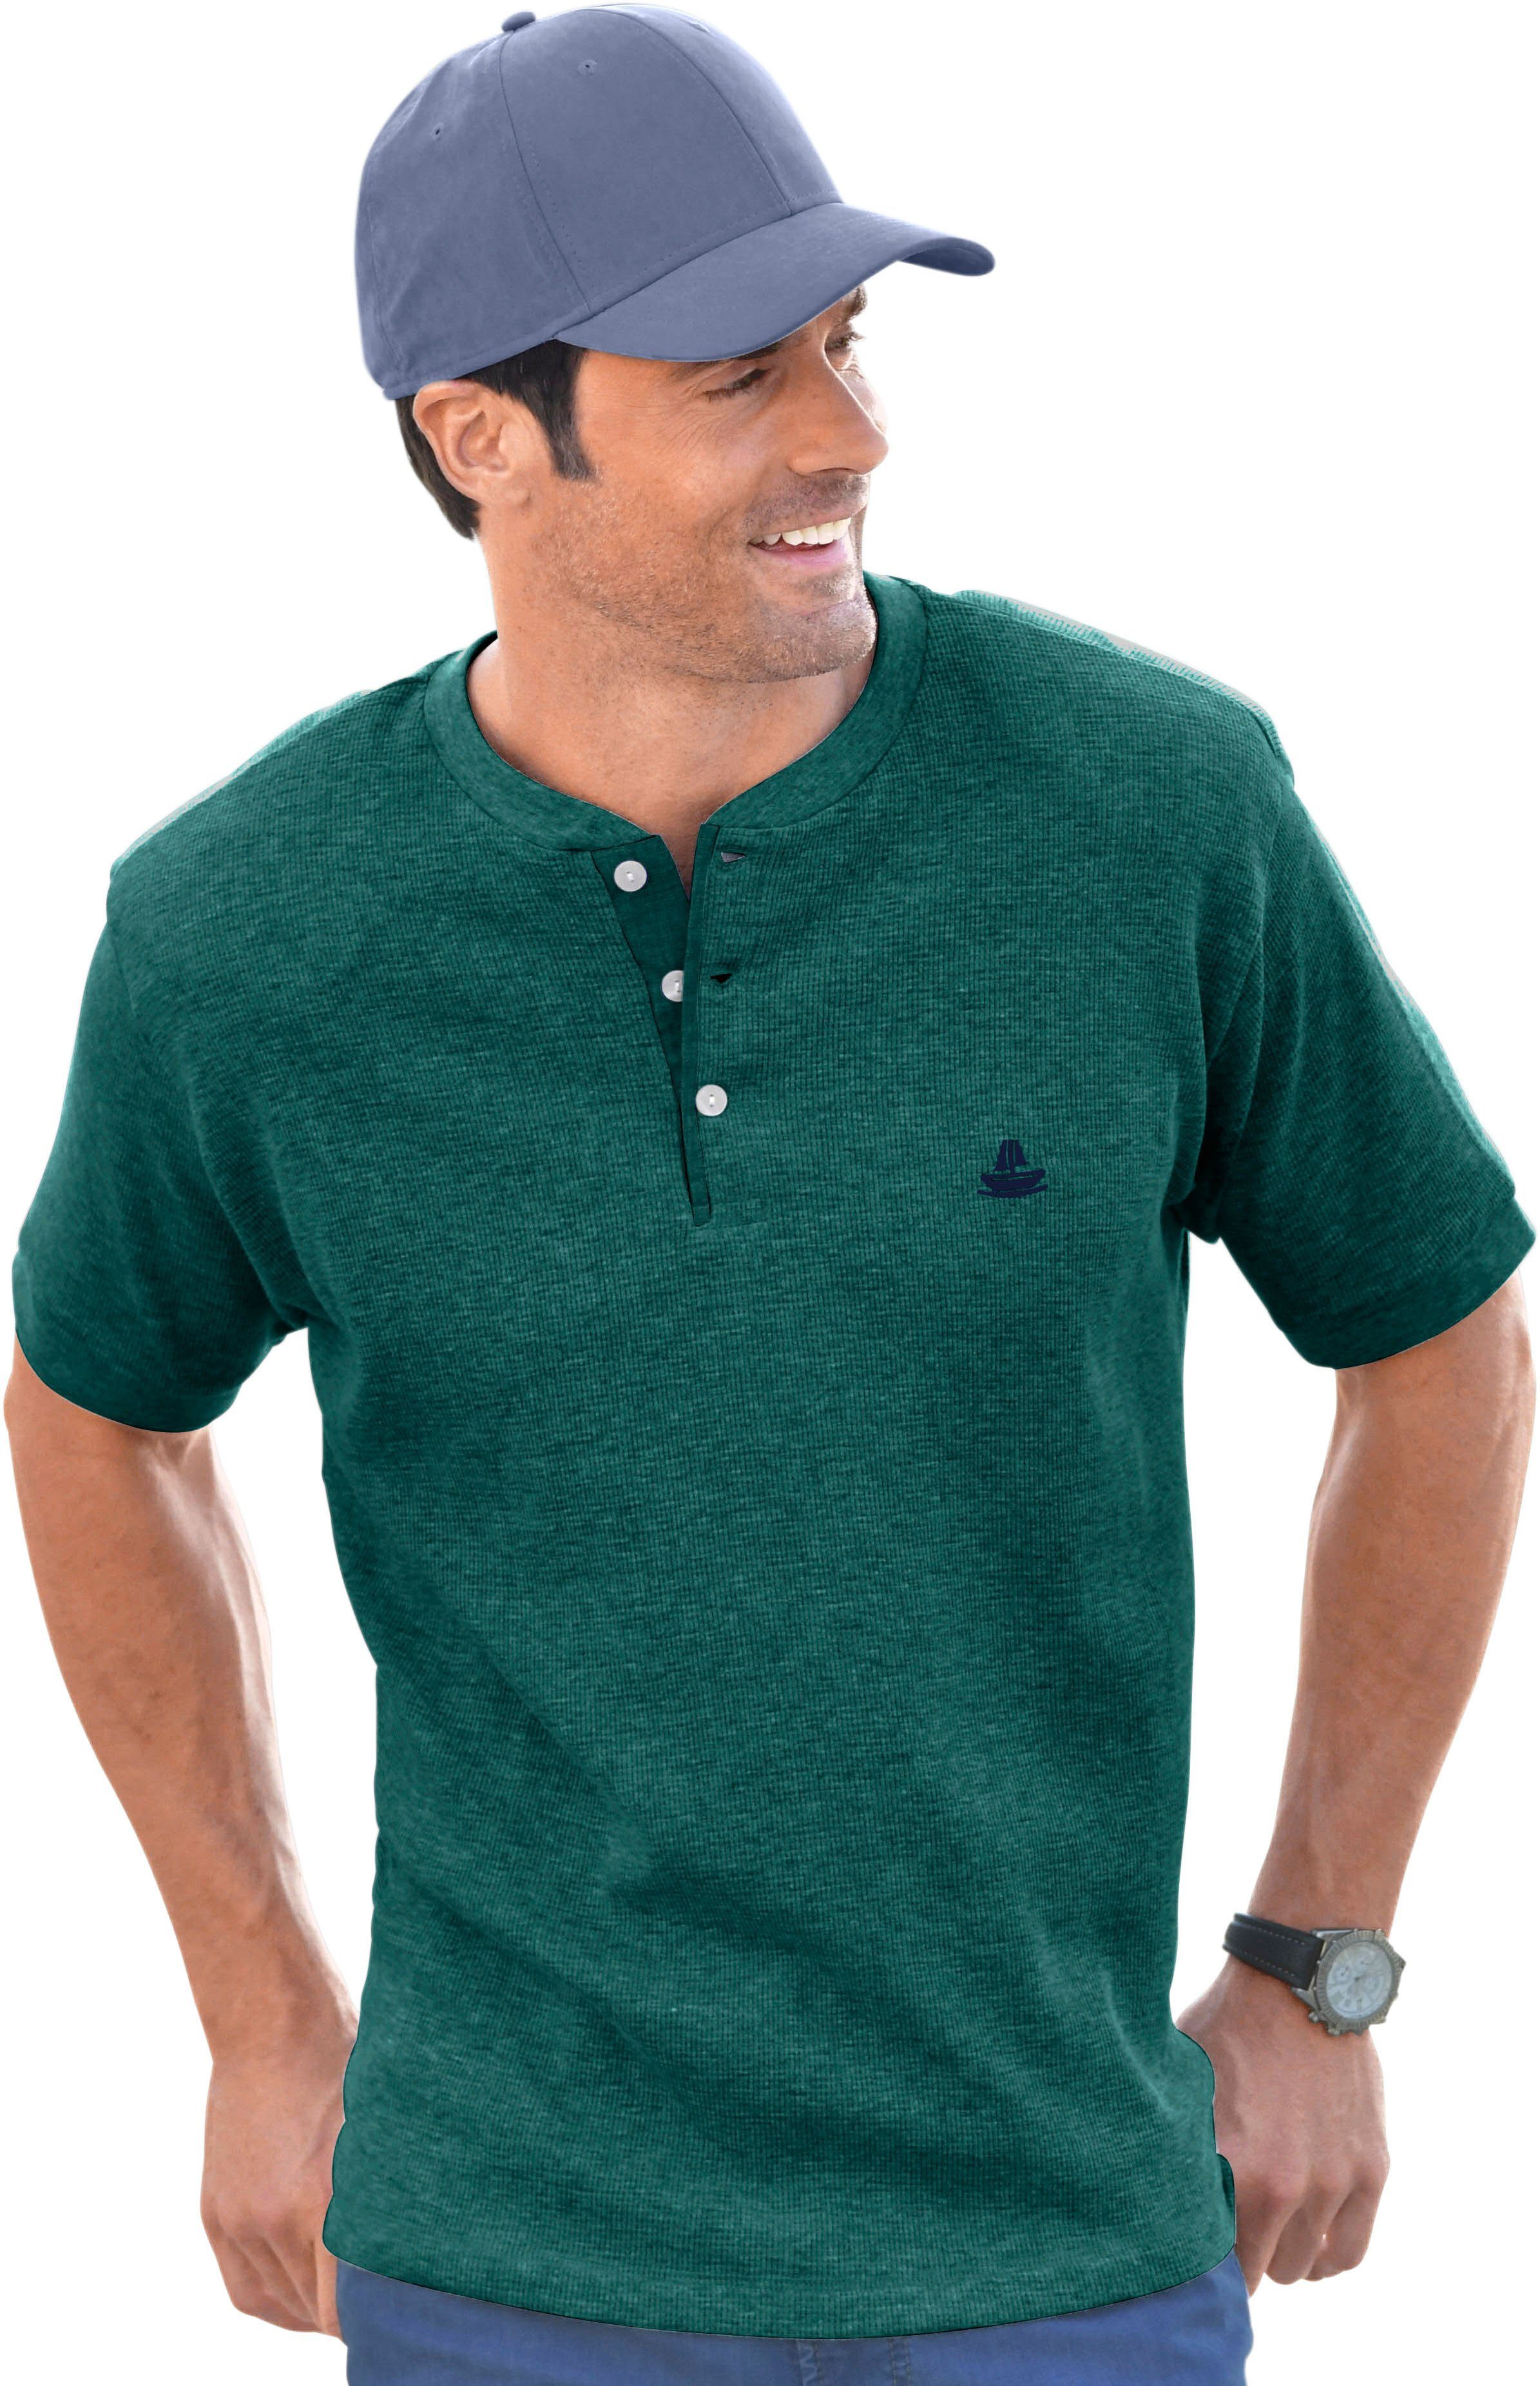 Marco Donati NU 15% KORTING: Marco Donati shirt met korte mouwen met driedimensionale wafelpiqué-structuur